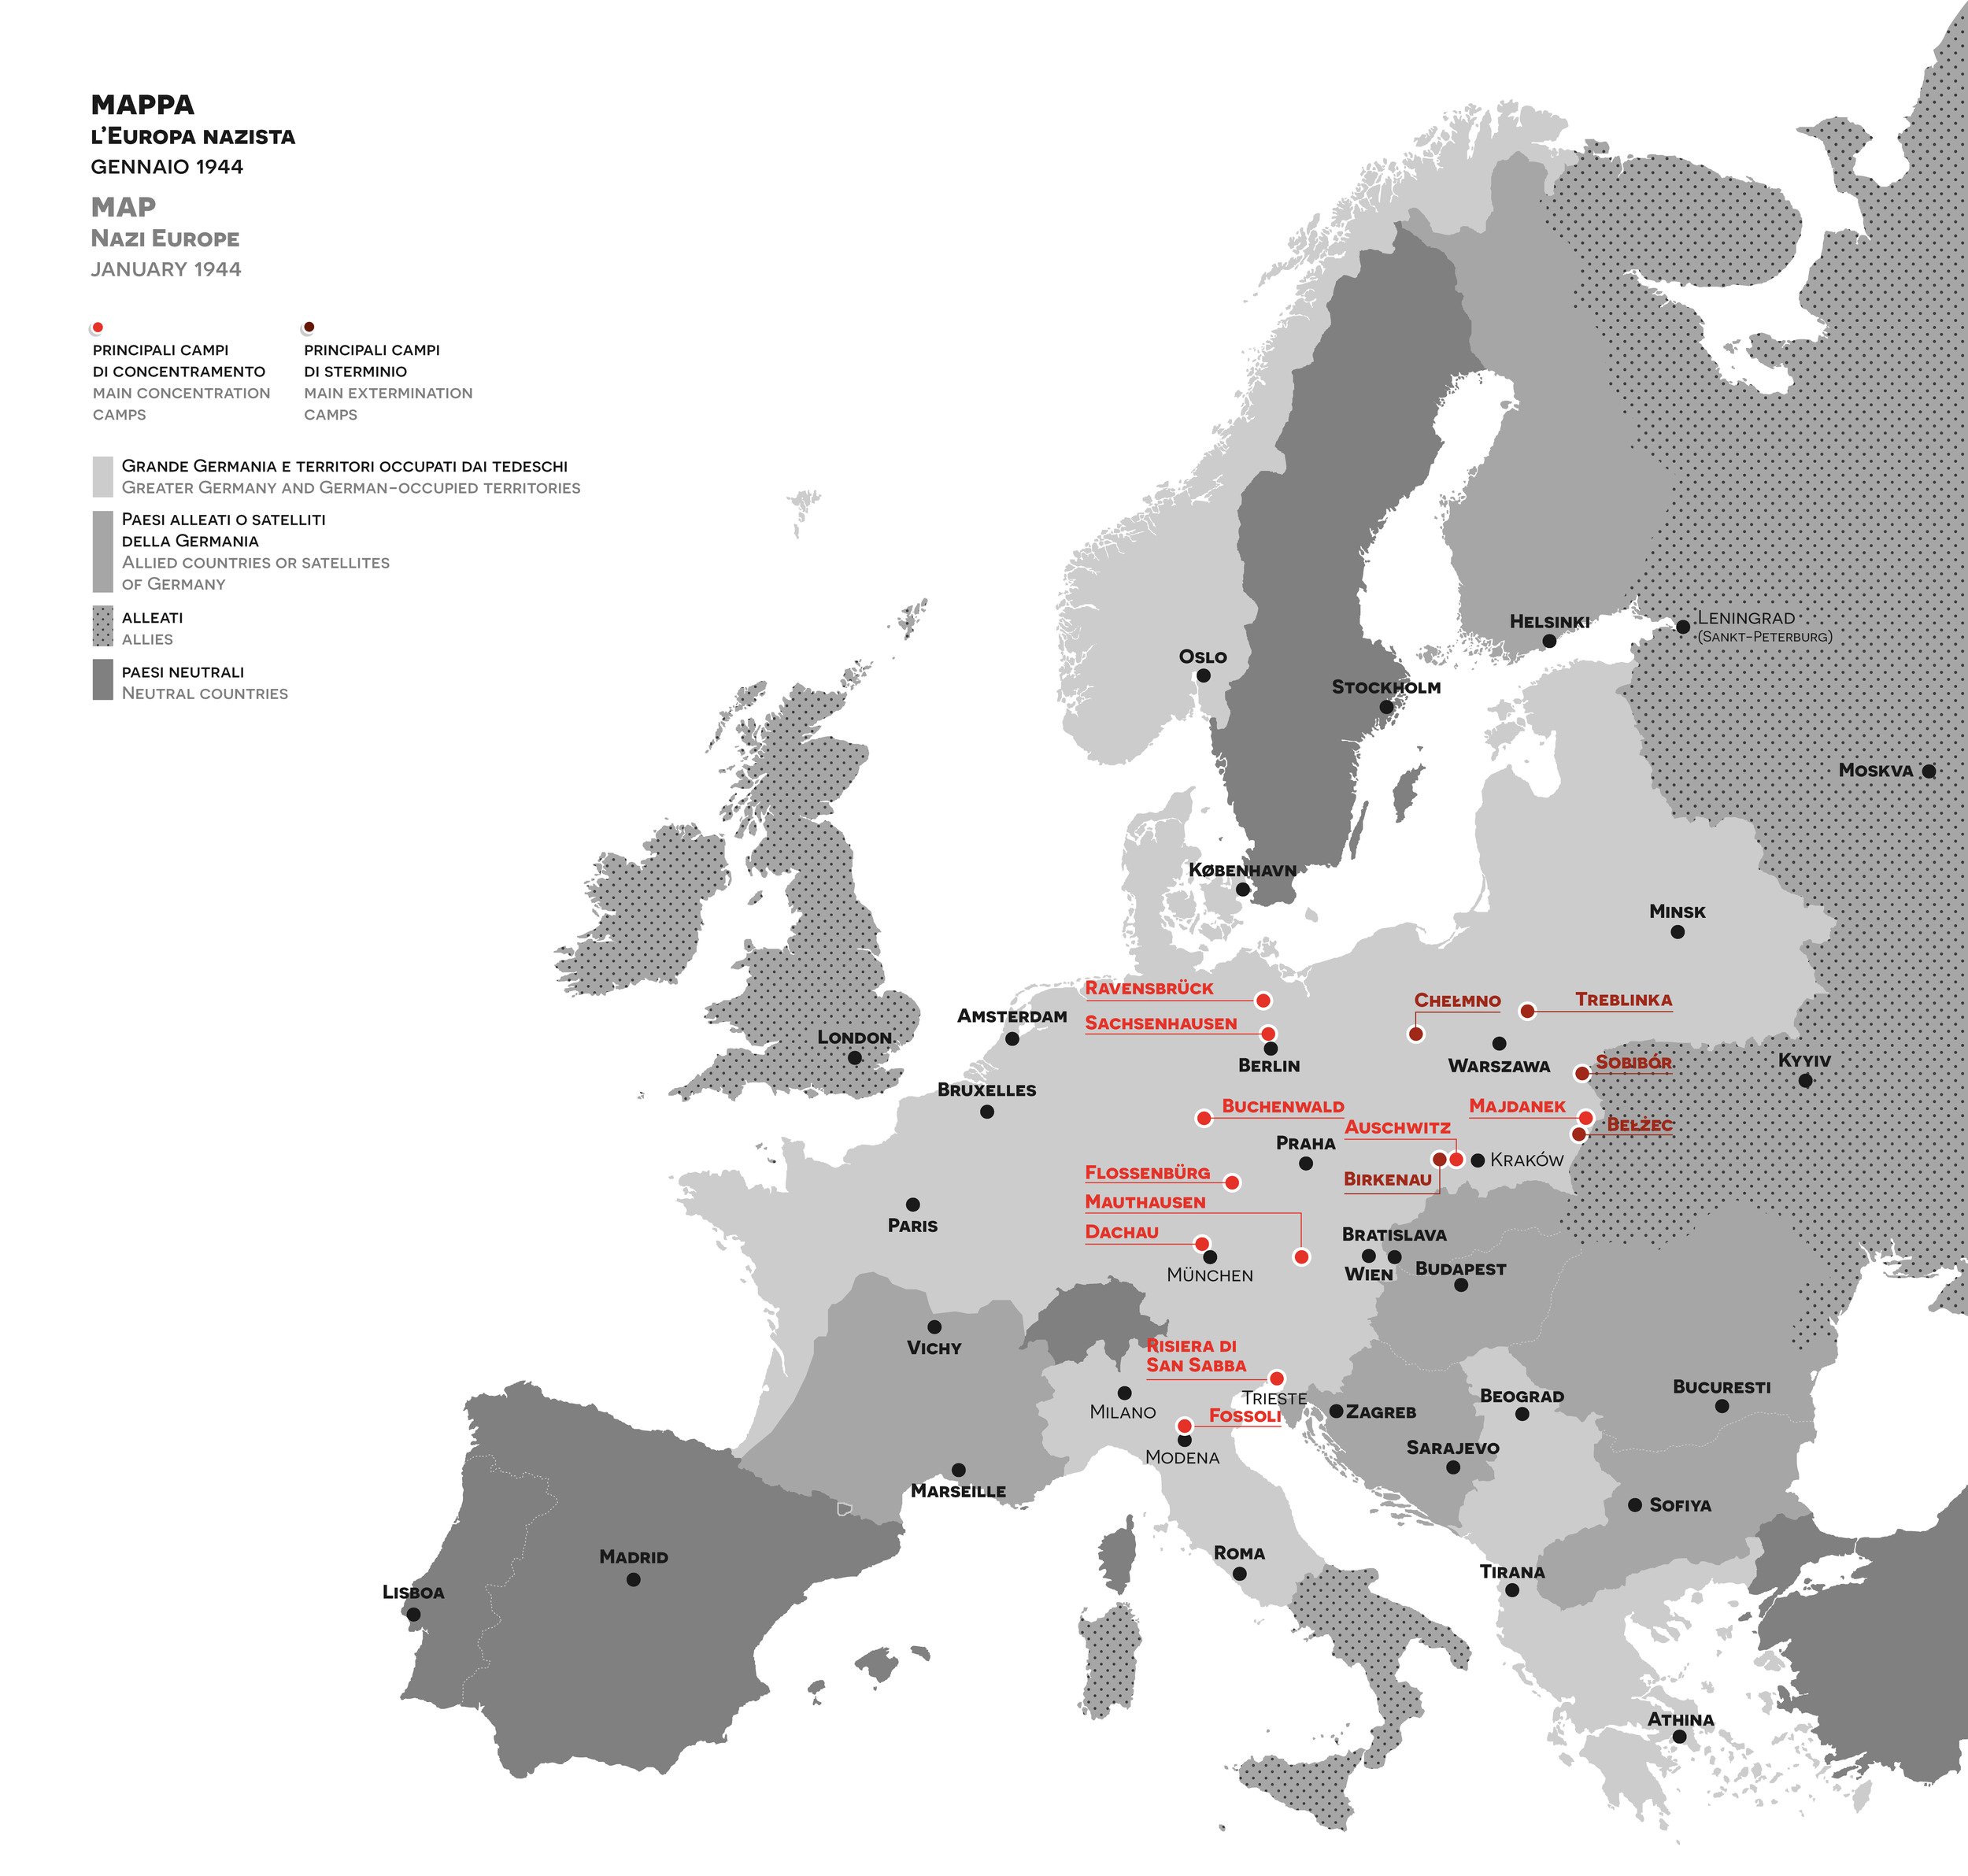  Mappa Europa nazista